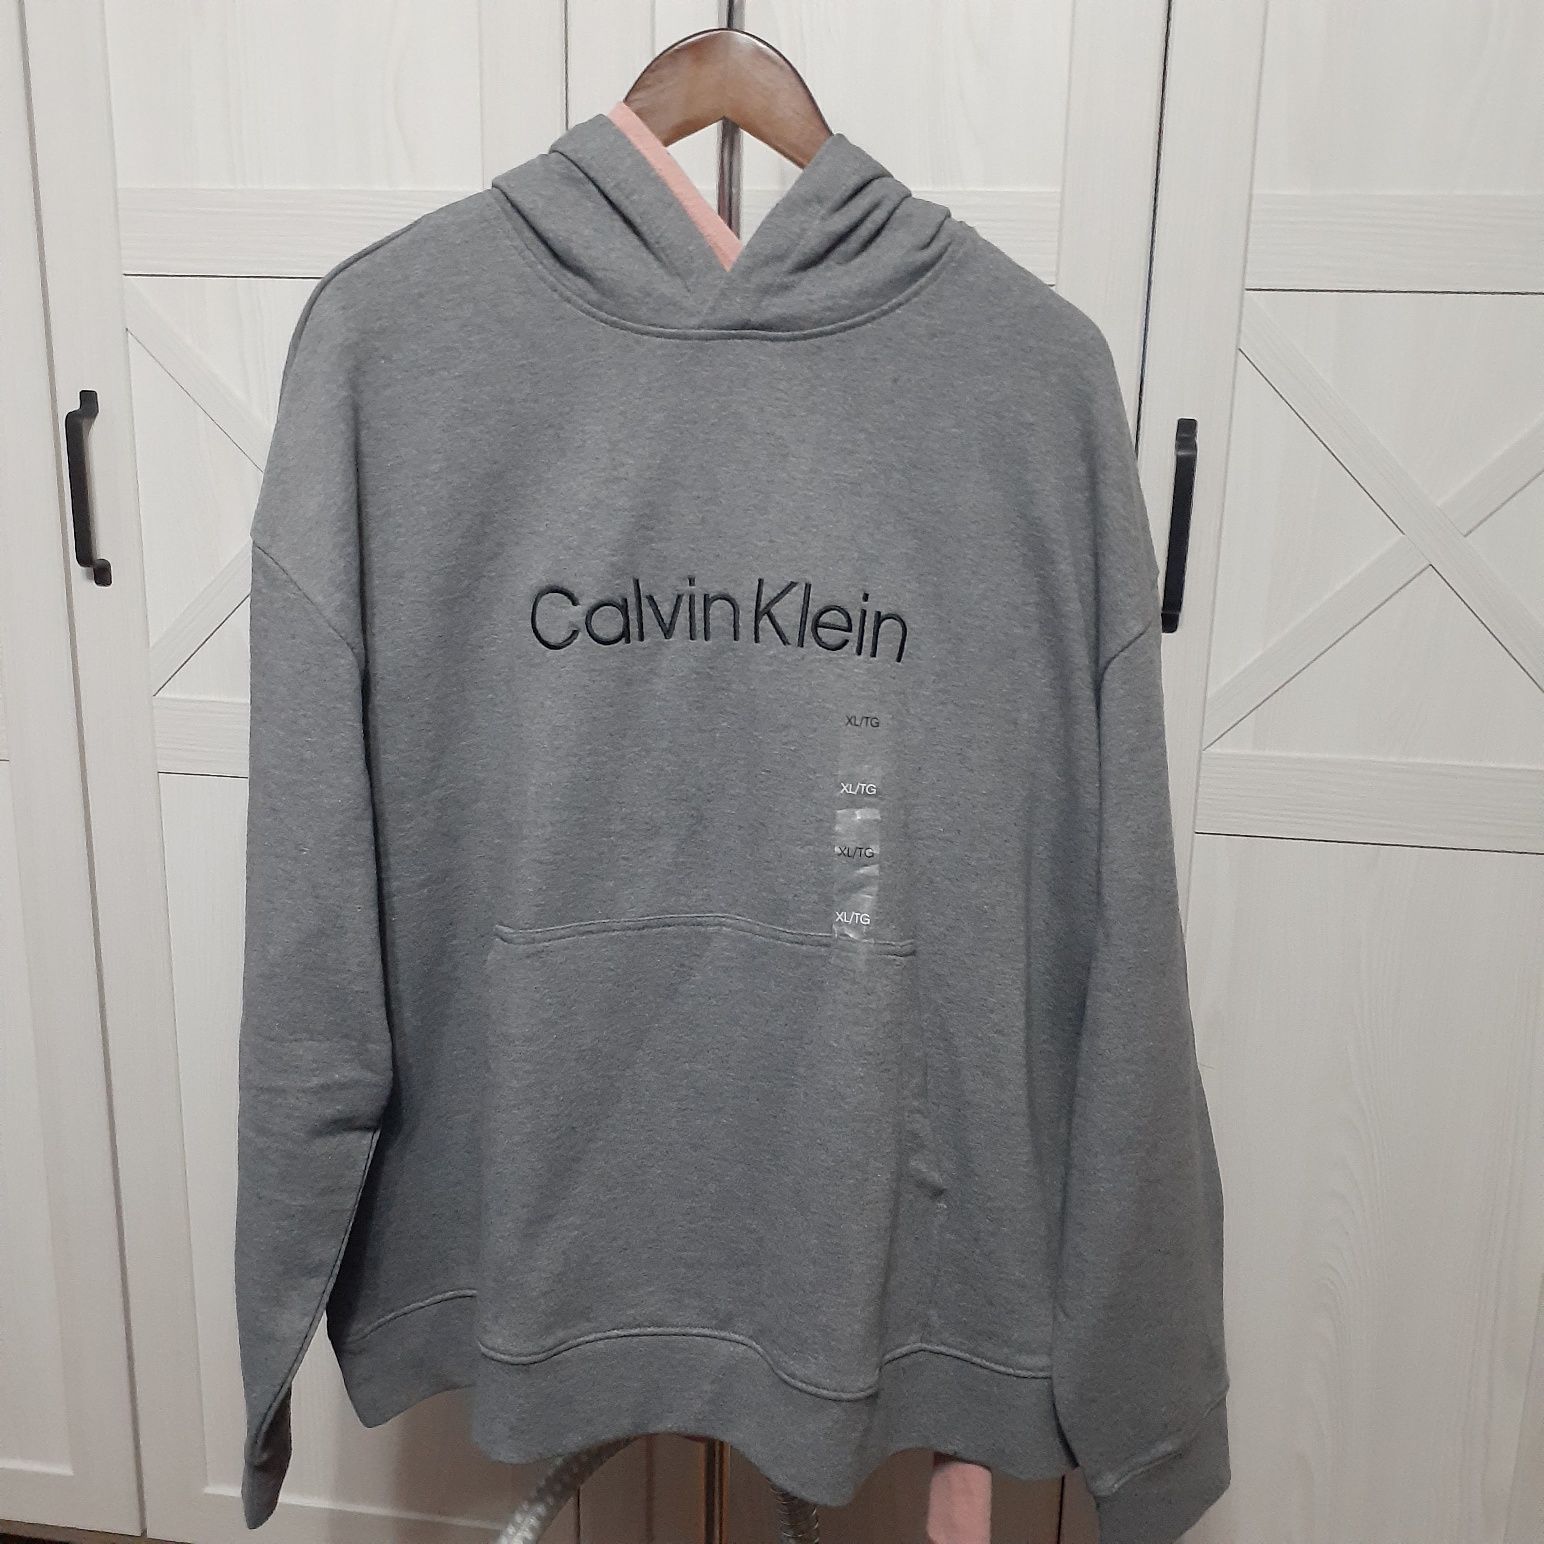 Calvin Klein,  двойка, оригинал,  100% хлопок, 54, 56  размеры